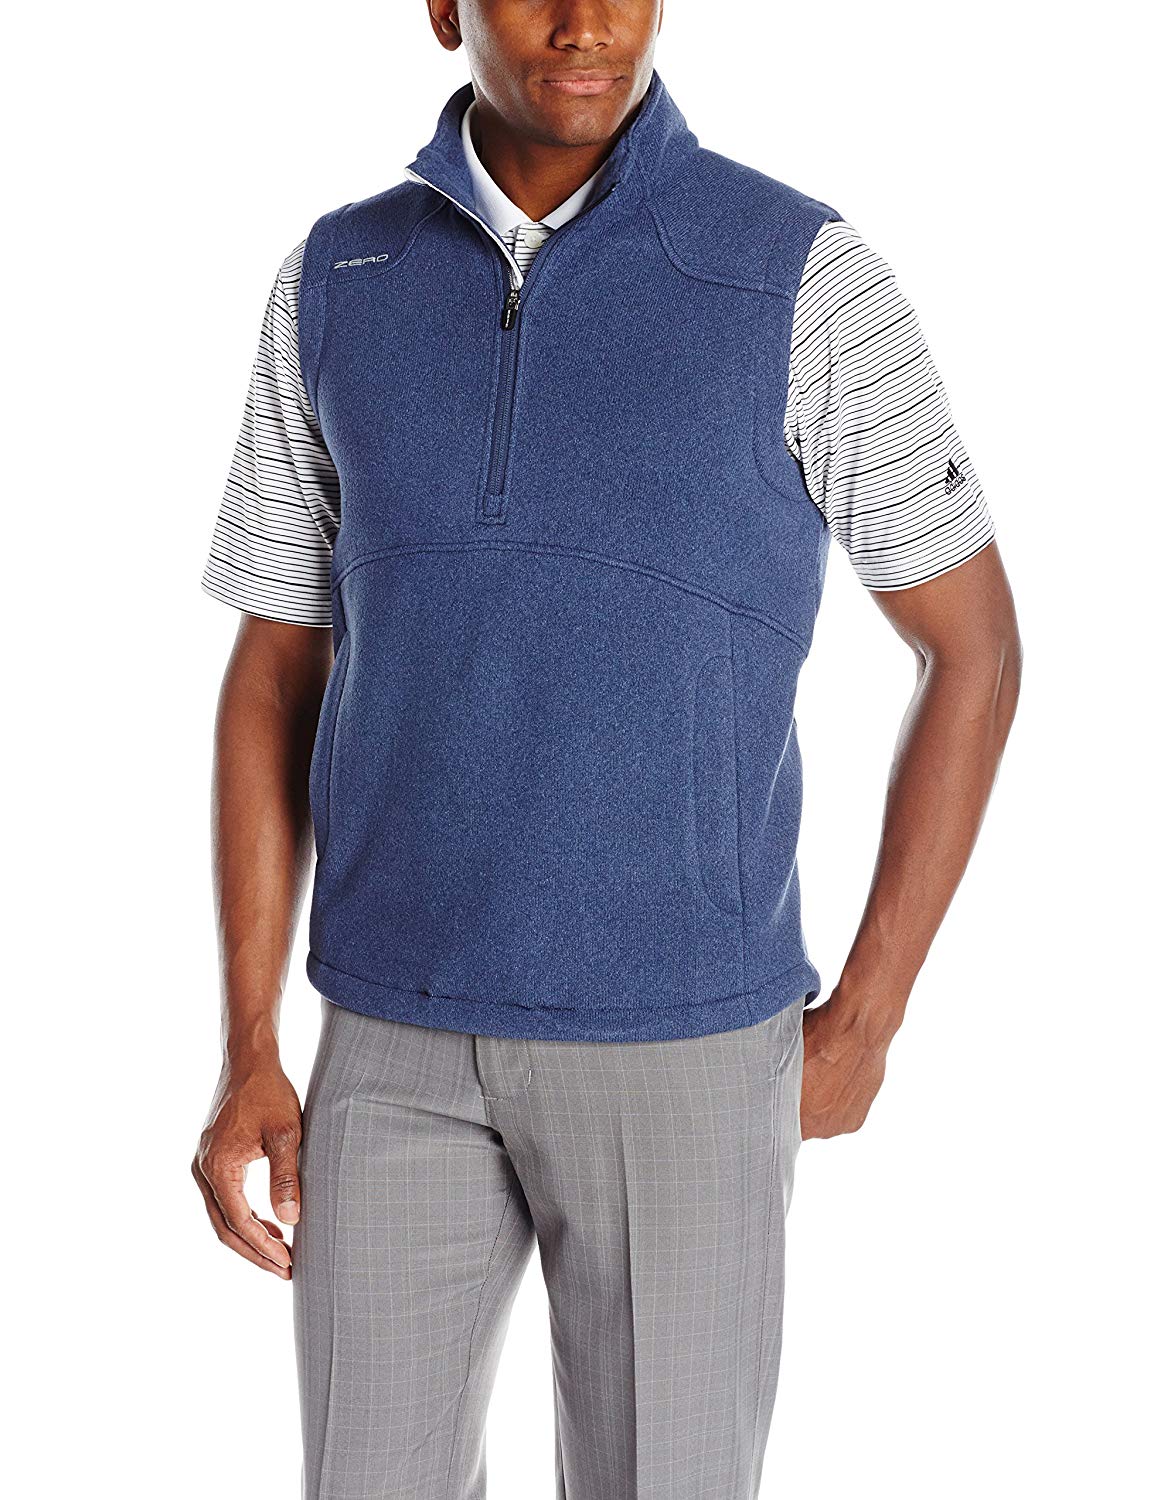 Mens Zero Restriction Unboiled Golf Sweater Vests